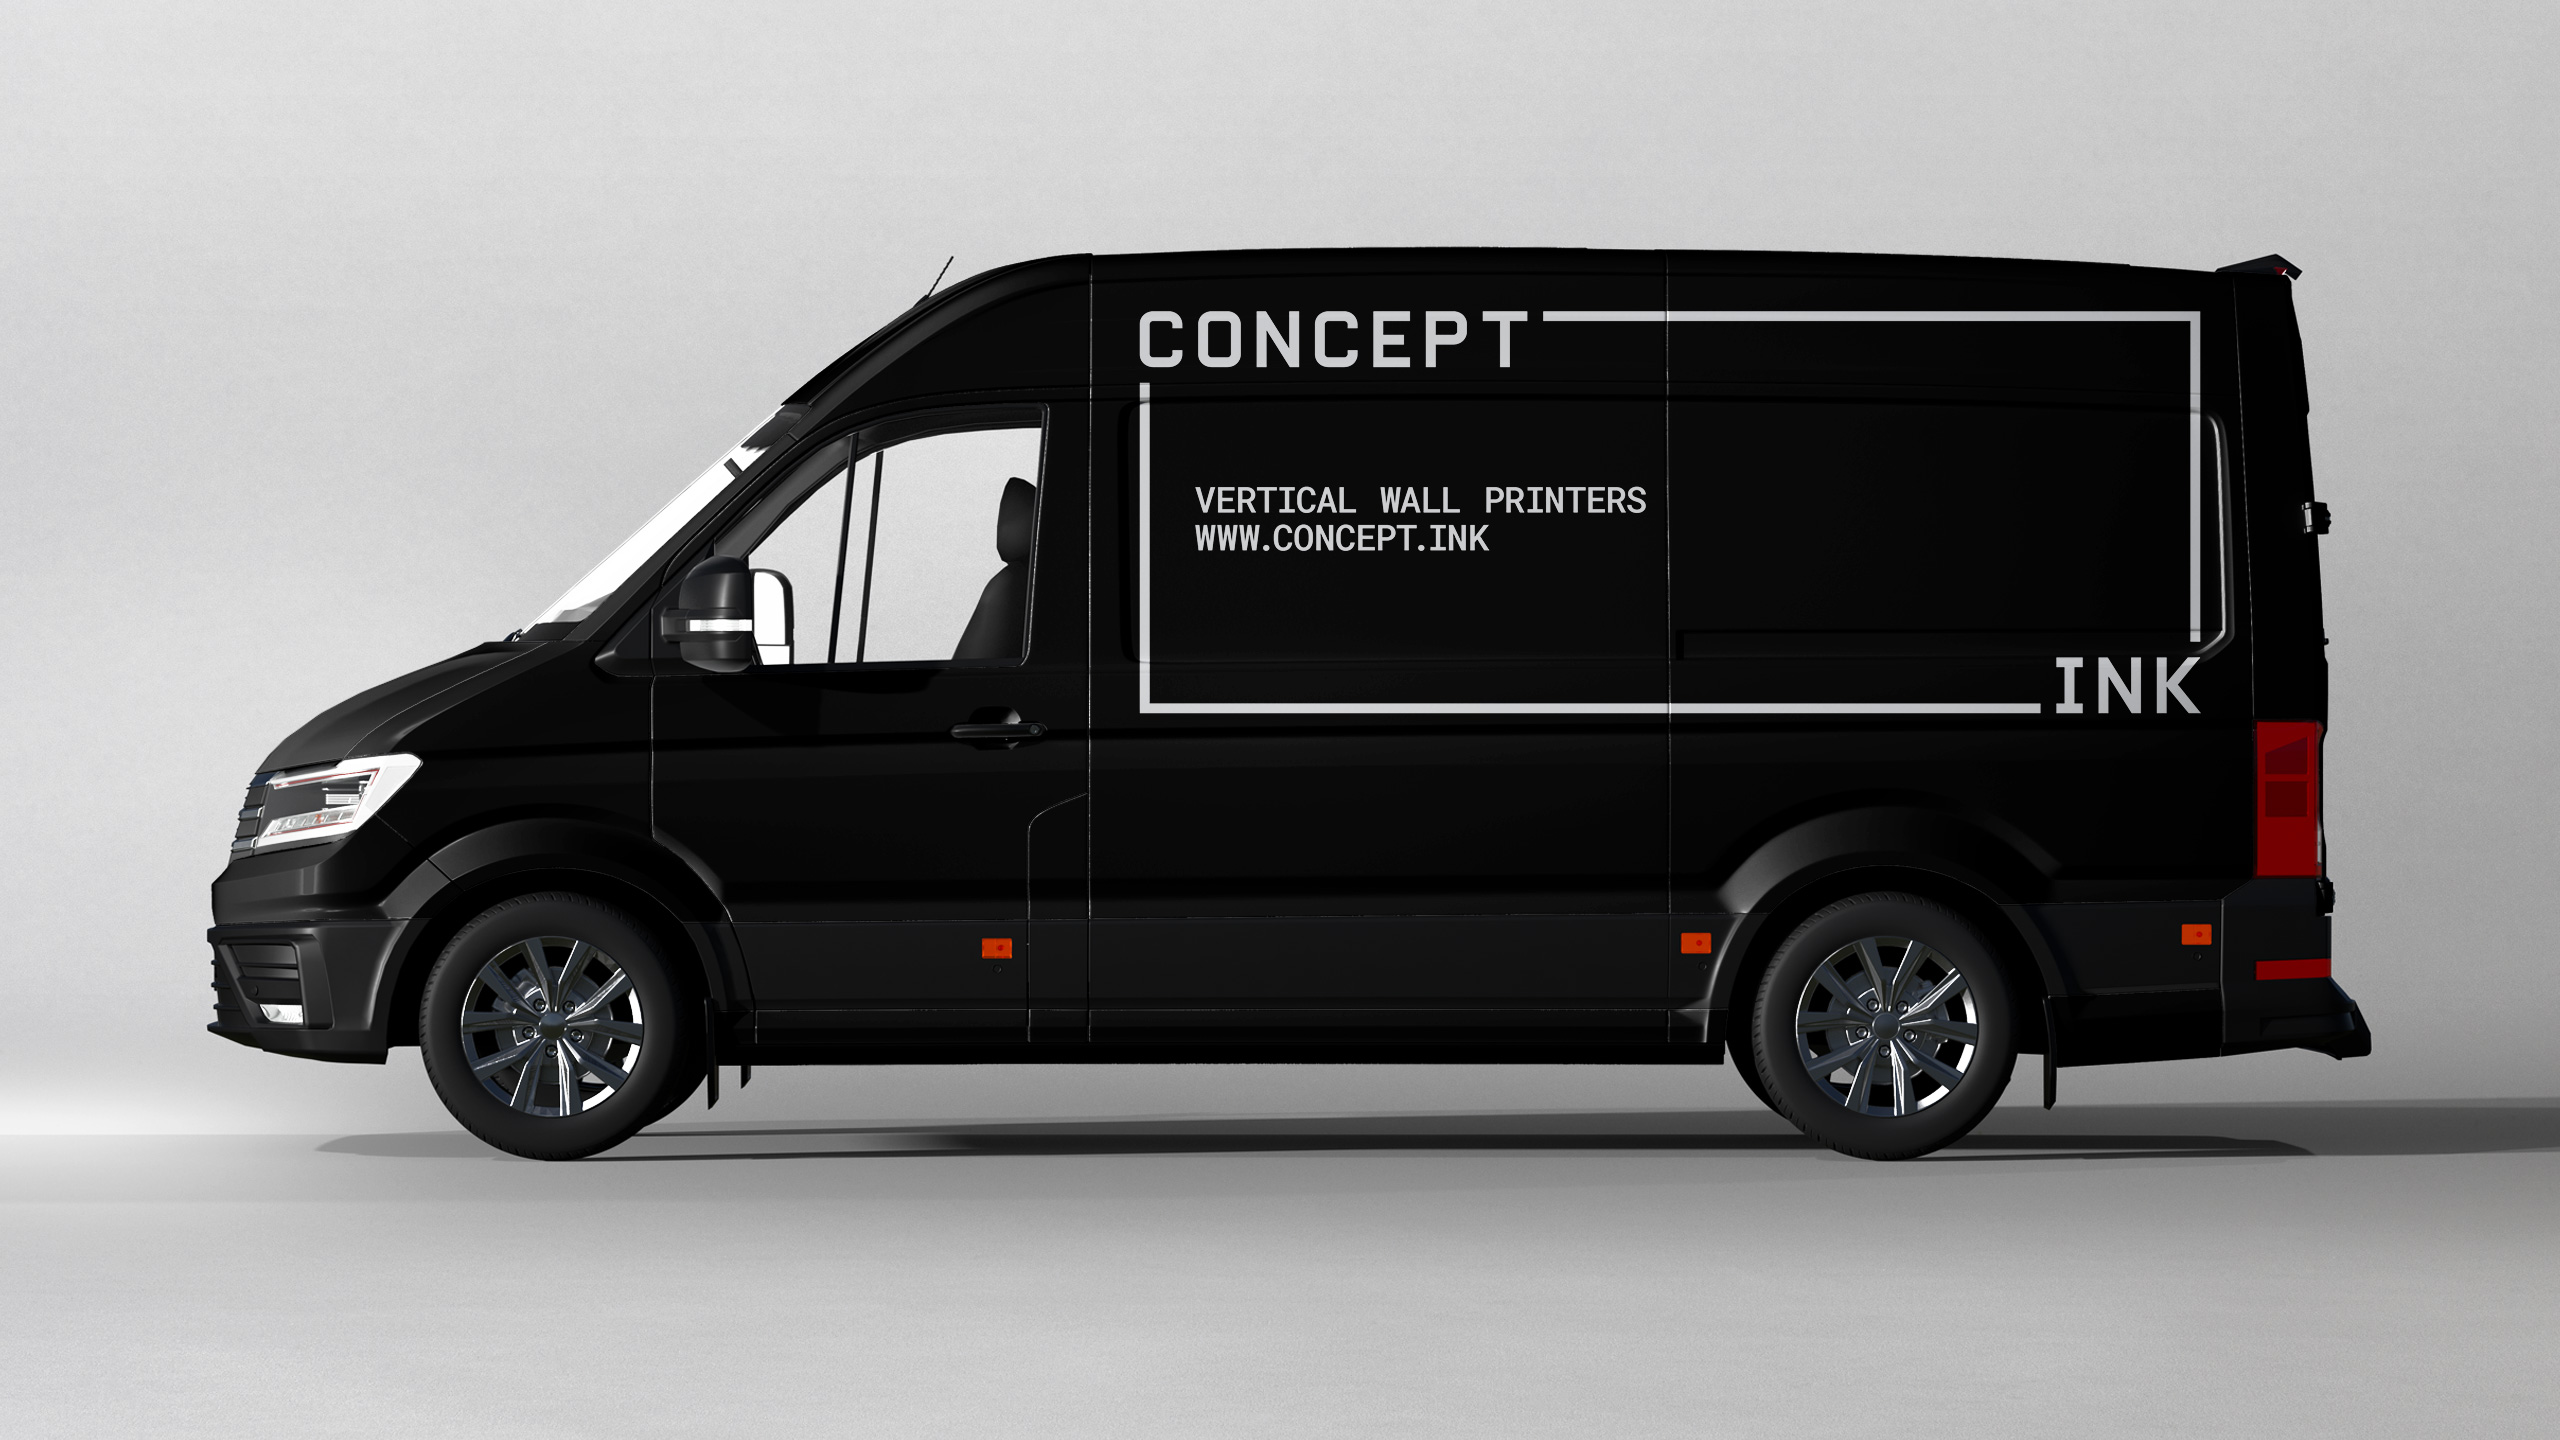 Concept Ink Van by The Coopers